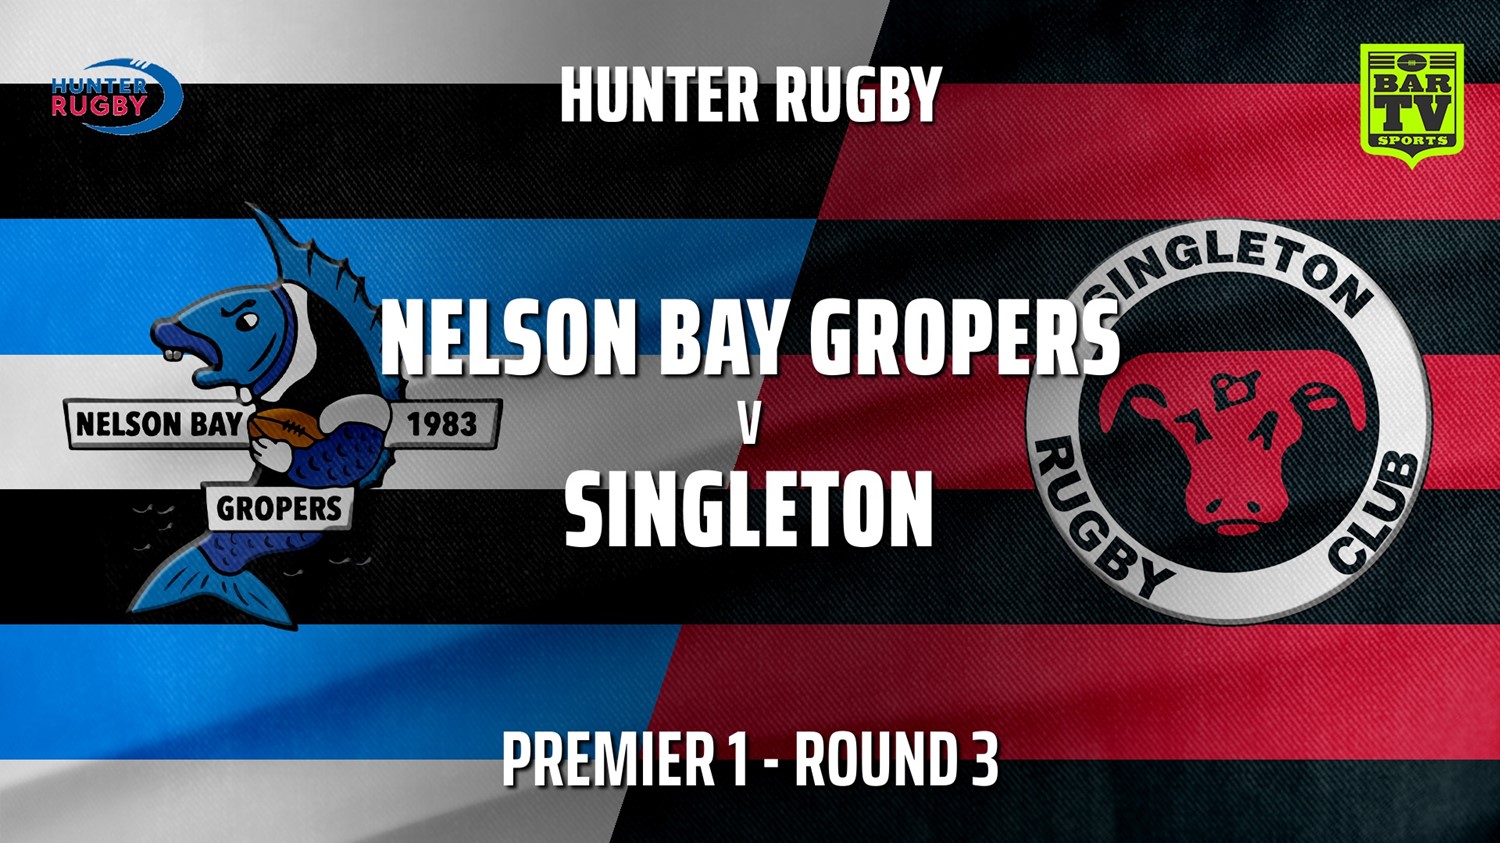 210501-HRU Round 3 - Premier 1 - Nelson Bay Gropers v Singleton Bulls Minigame Slate Image